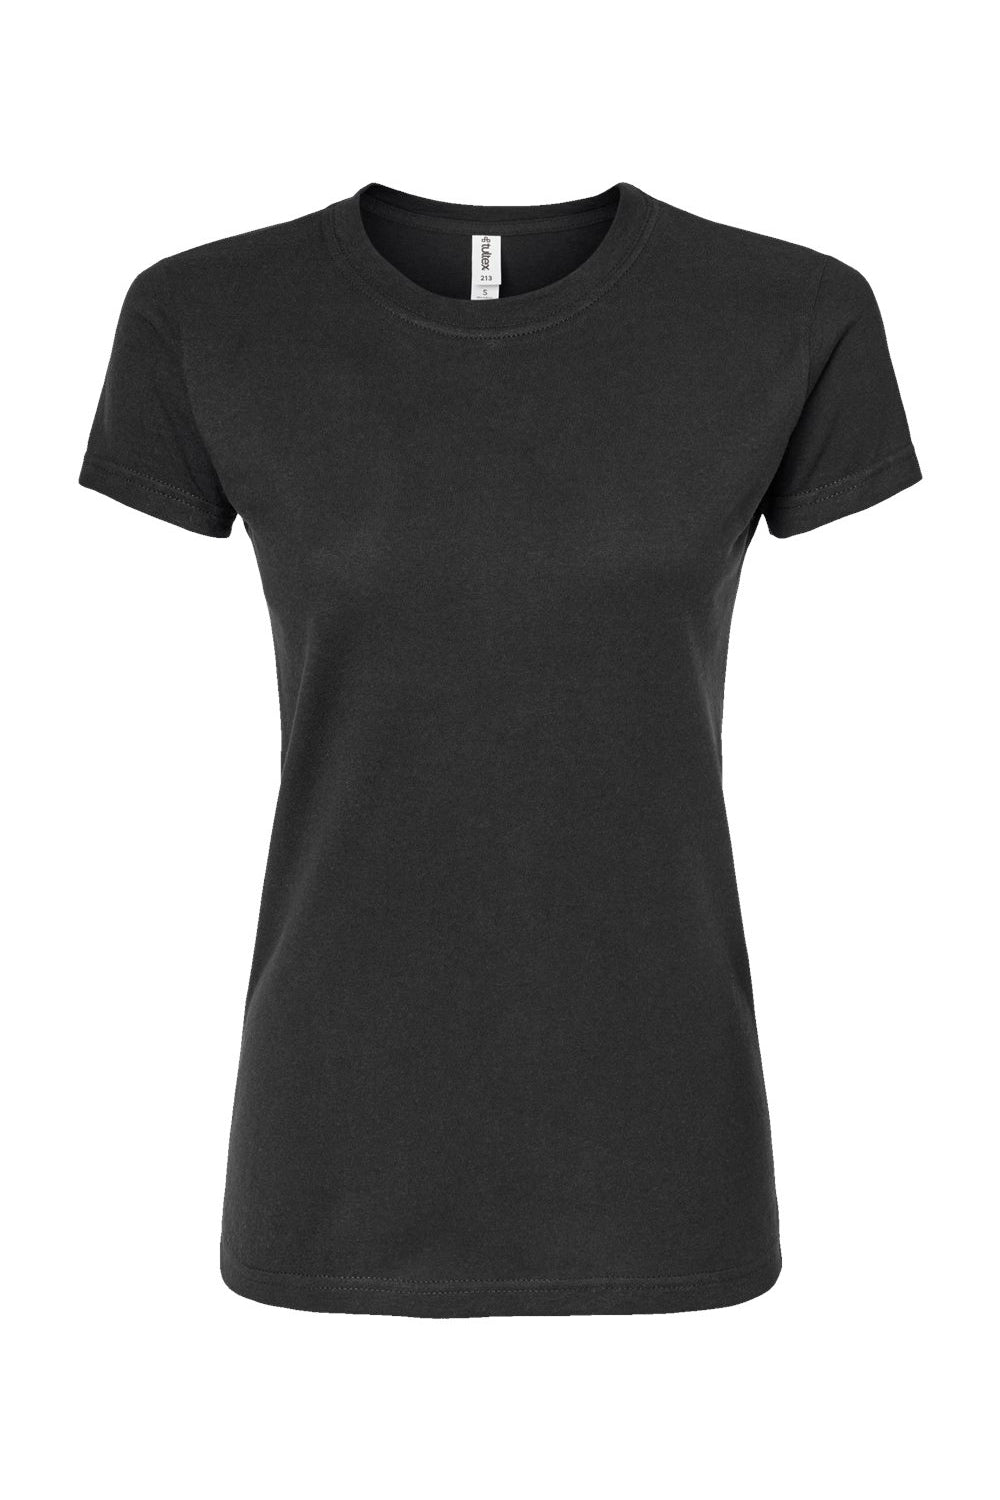 Tultex 213 Womens Fine Jersey Slim Fit Short Sleeve Crewneck T-Shirt Coal Grey Flat Front